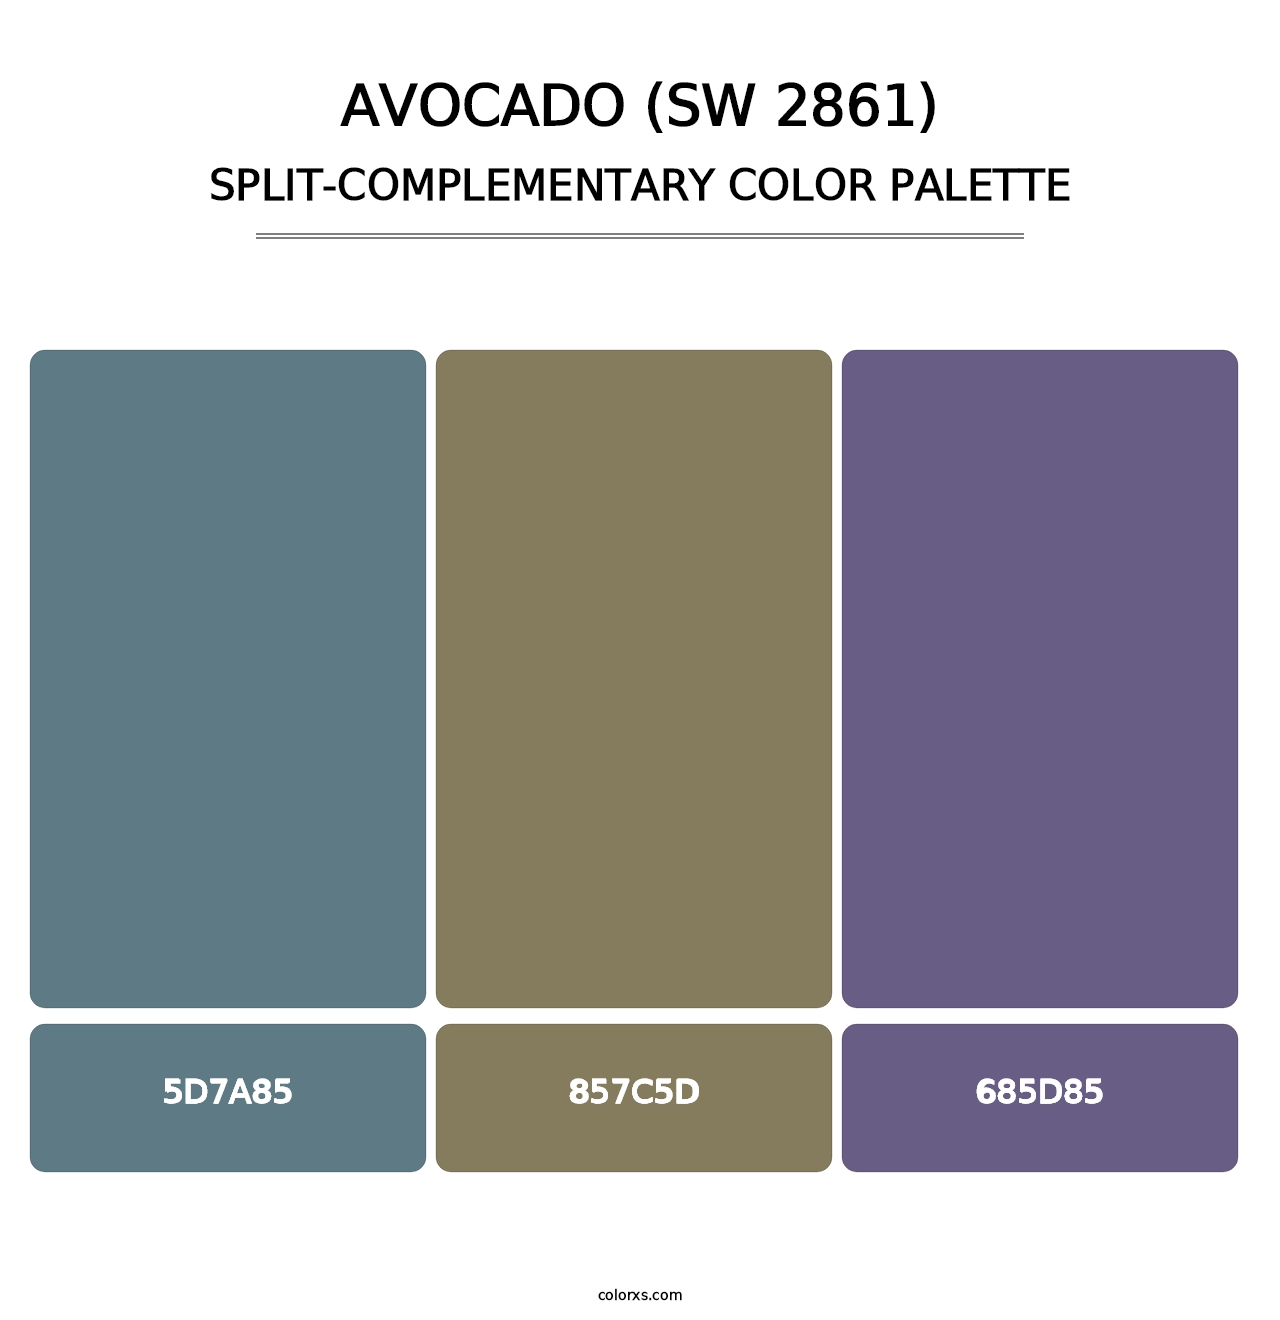 Avocado (SW 2861) - Split-Complementary Color Palette